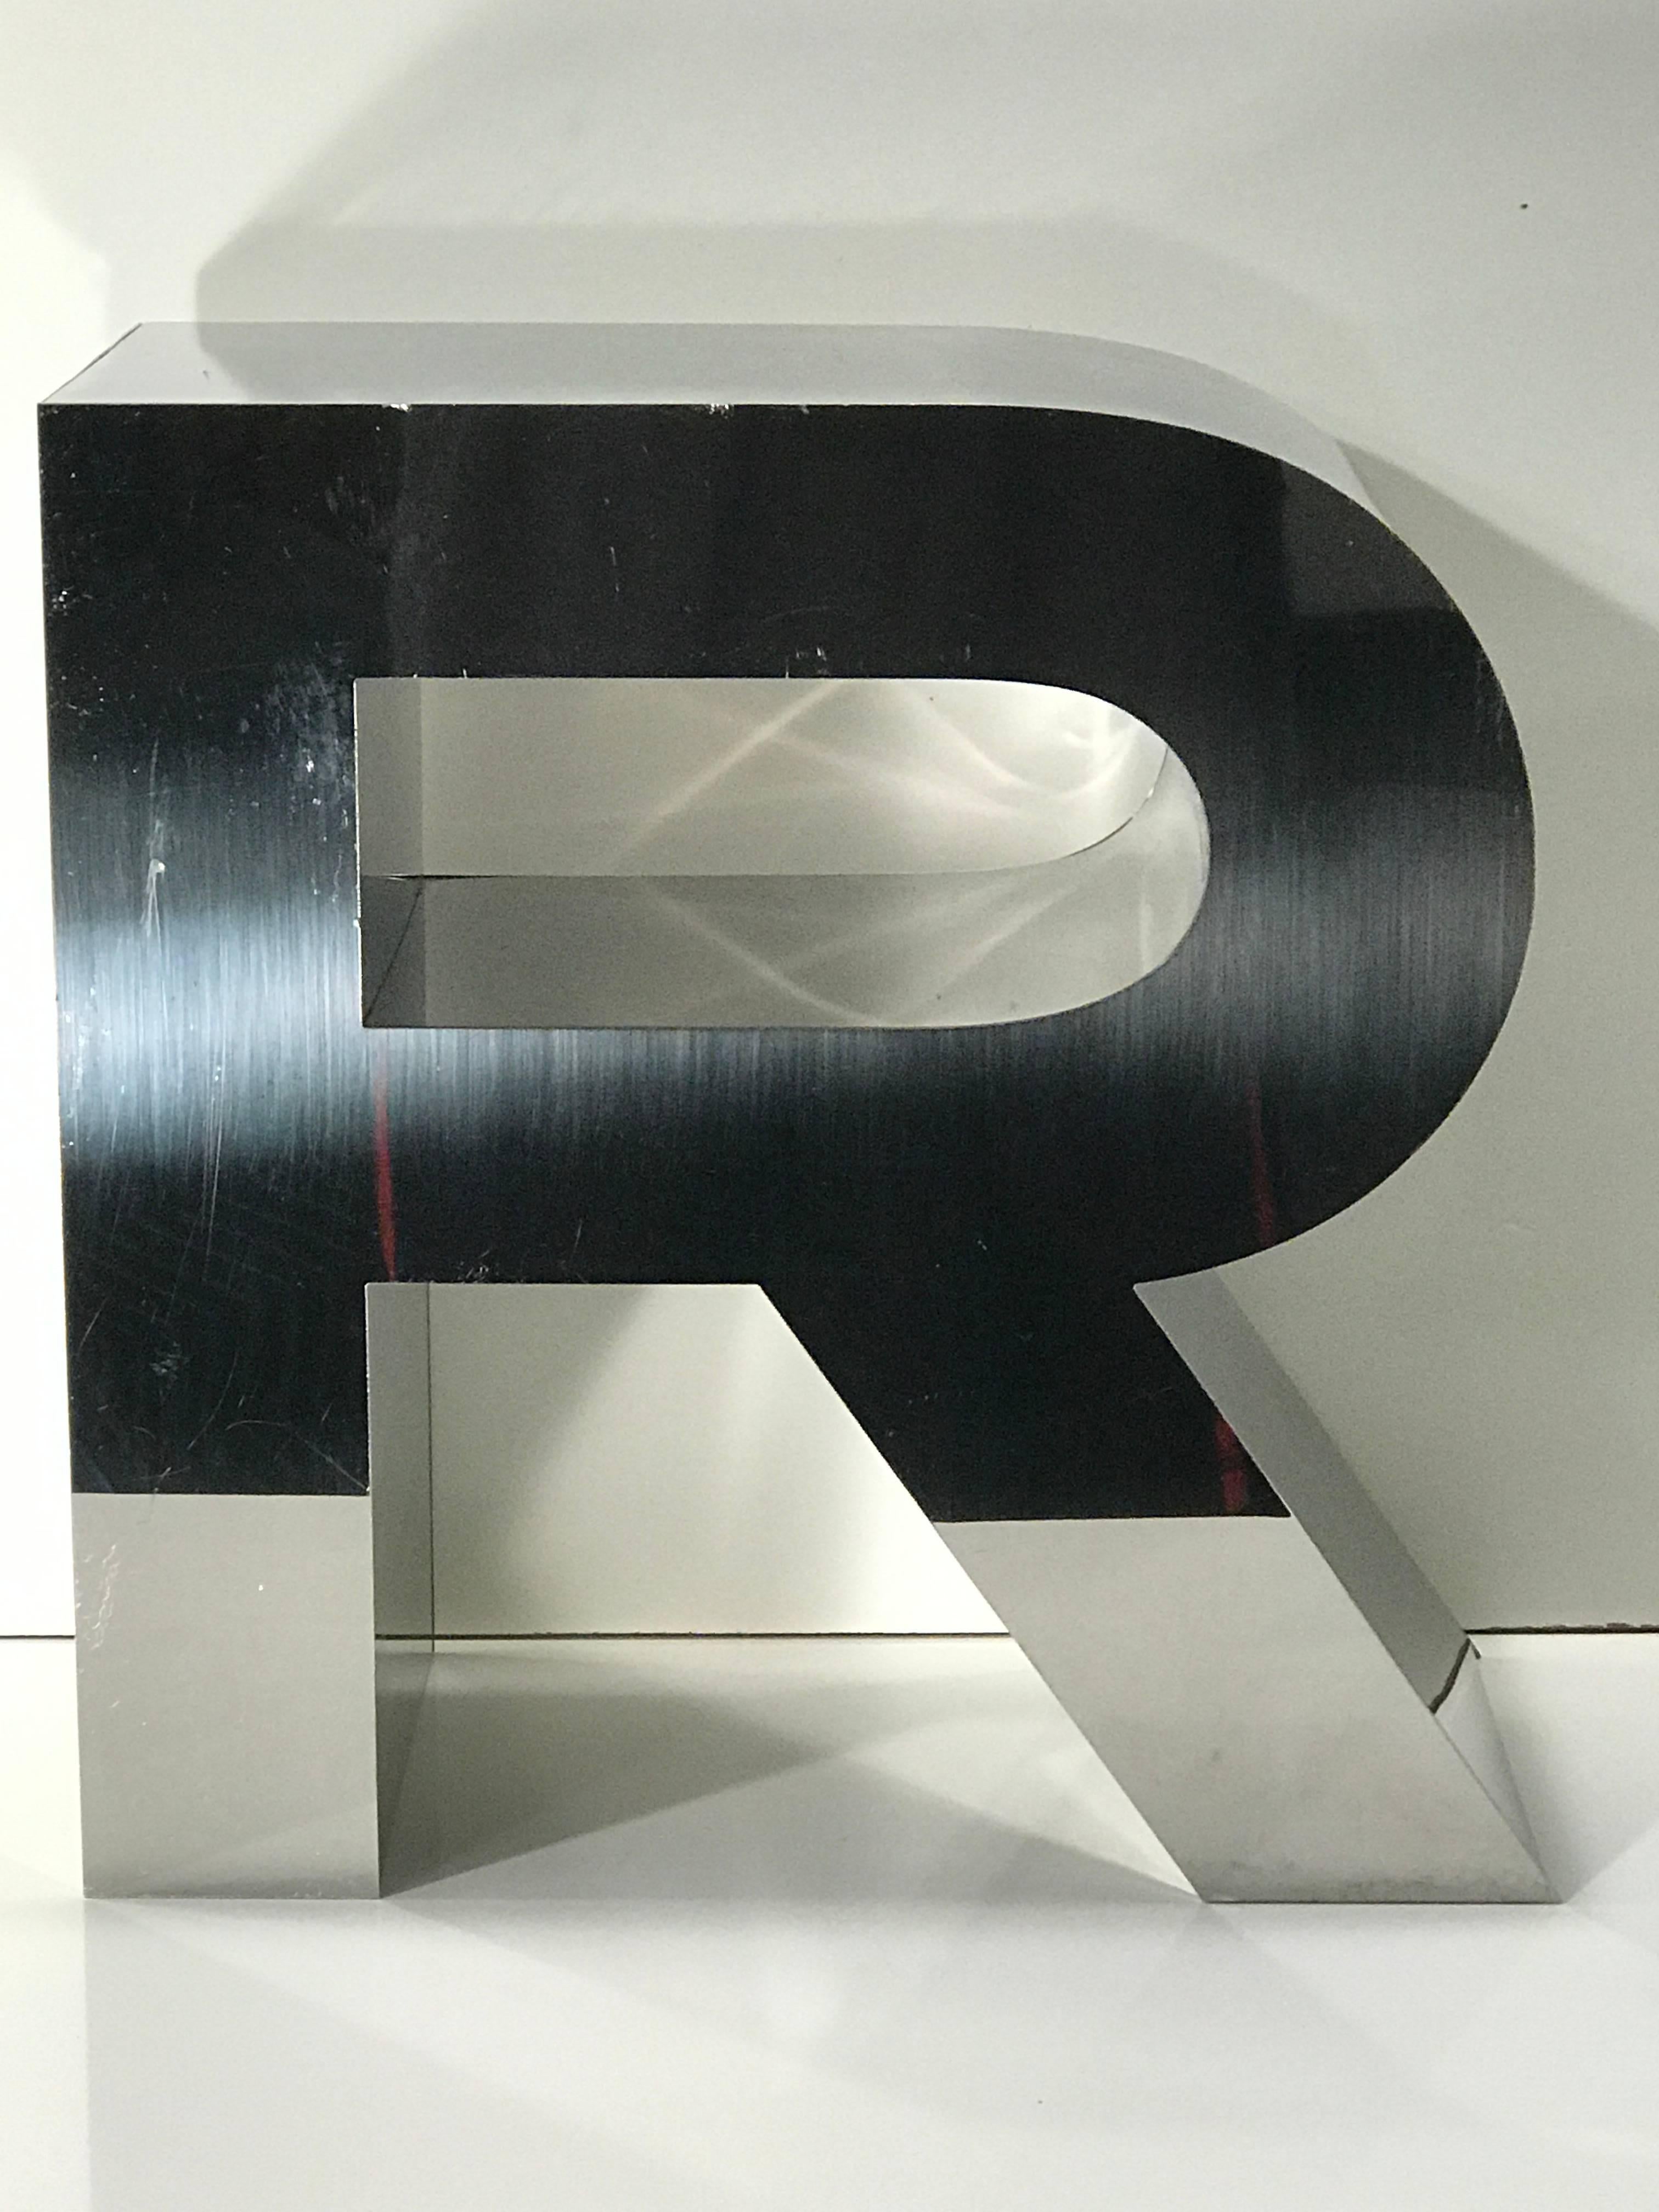 Vintage Ralph Lauren logo letters, In two parts, large-scale capital R & L 
Measures: As shown 22.5